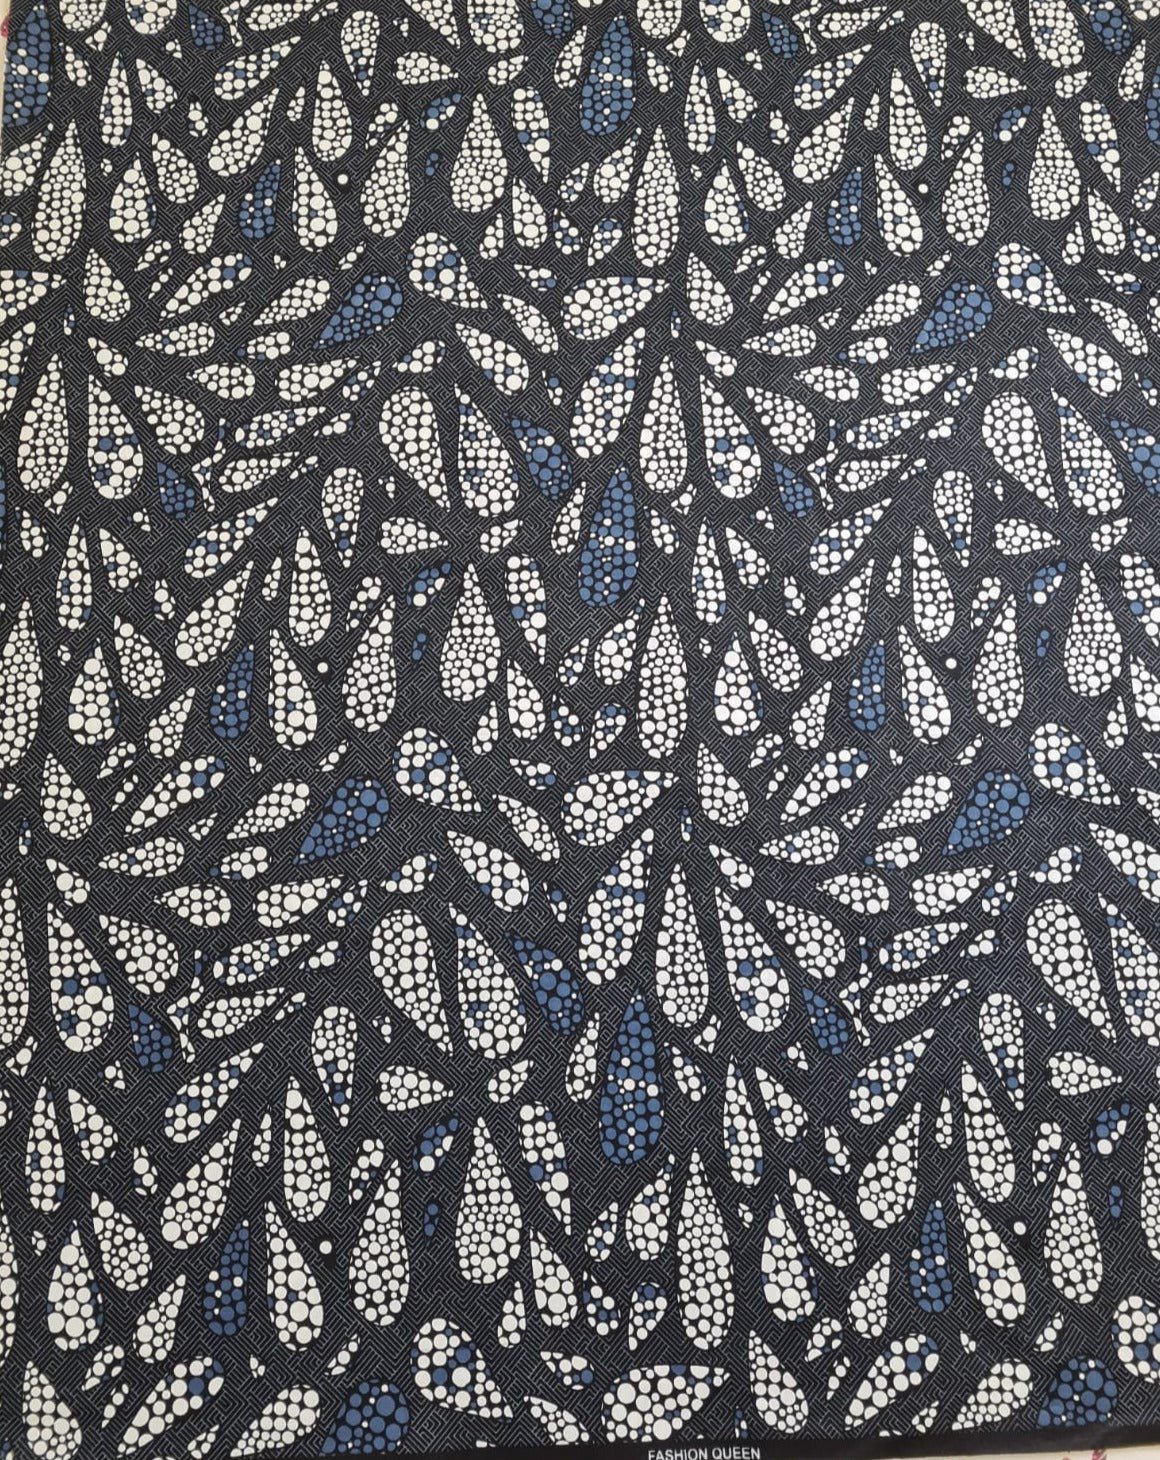 Grey and White Ankara Fabric - akpy5021 - House of Prints